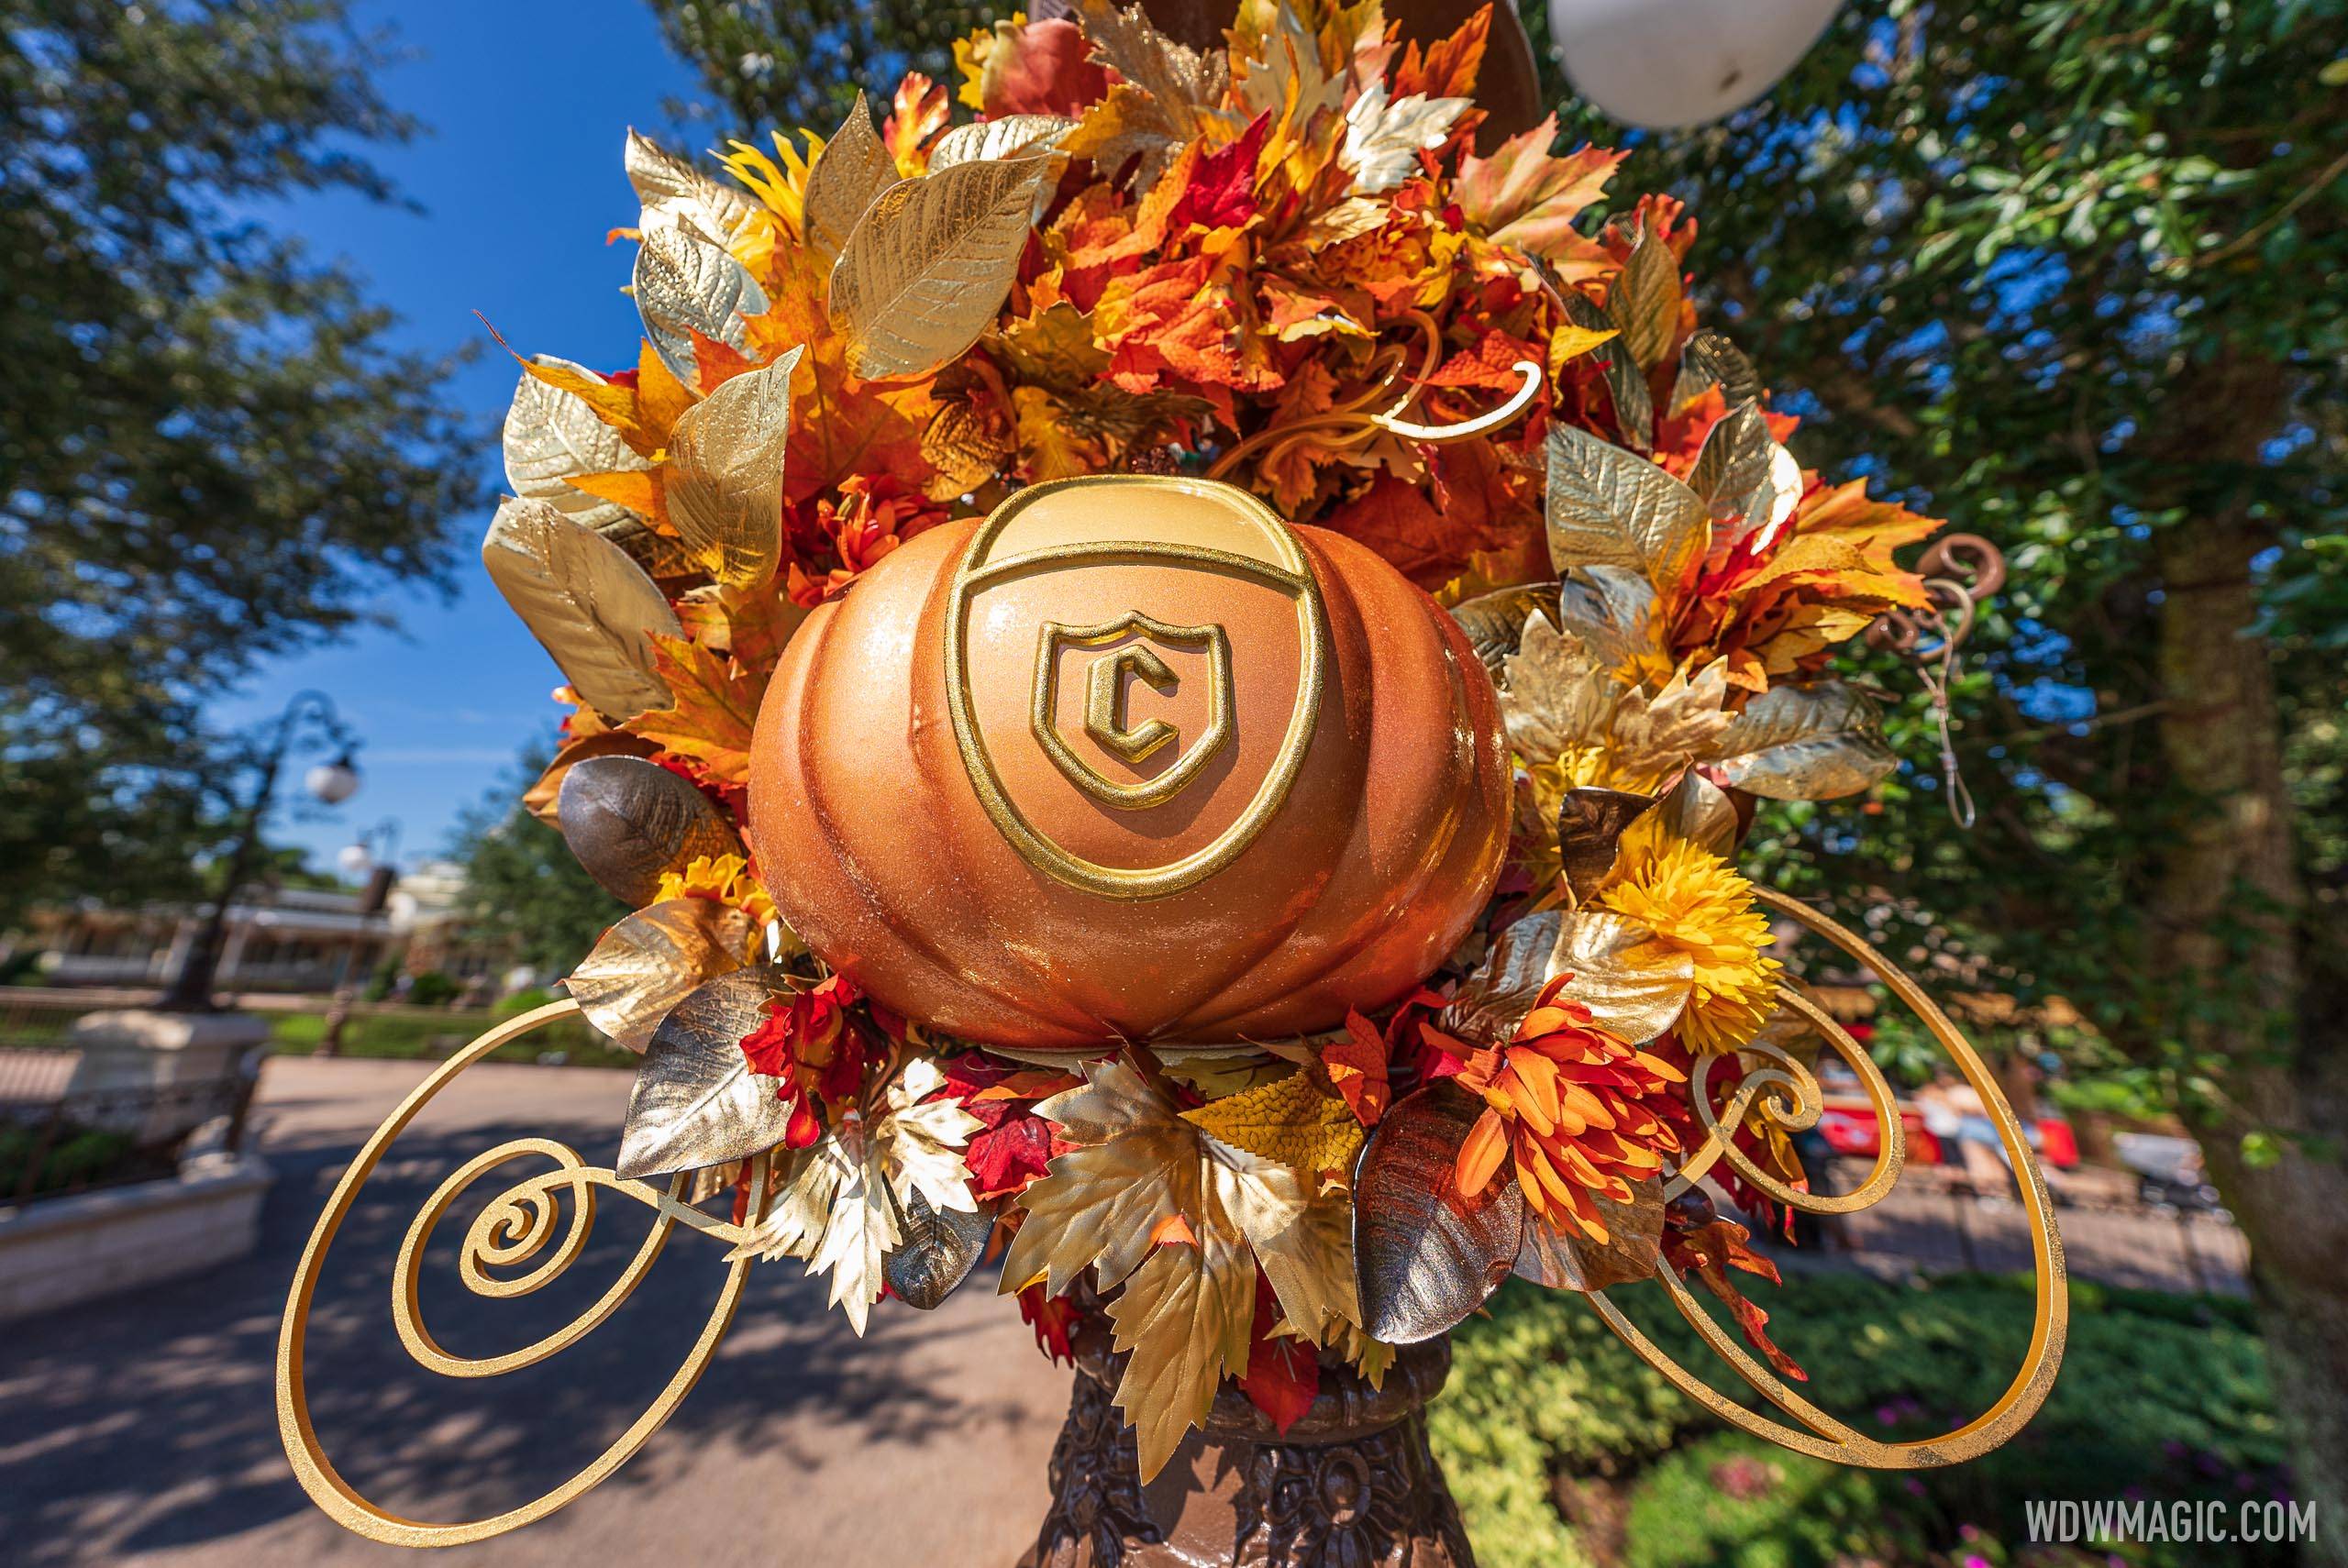 Cinderella Coach pumpkins added to the fall decor at Magic Kingdom